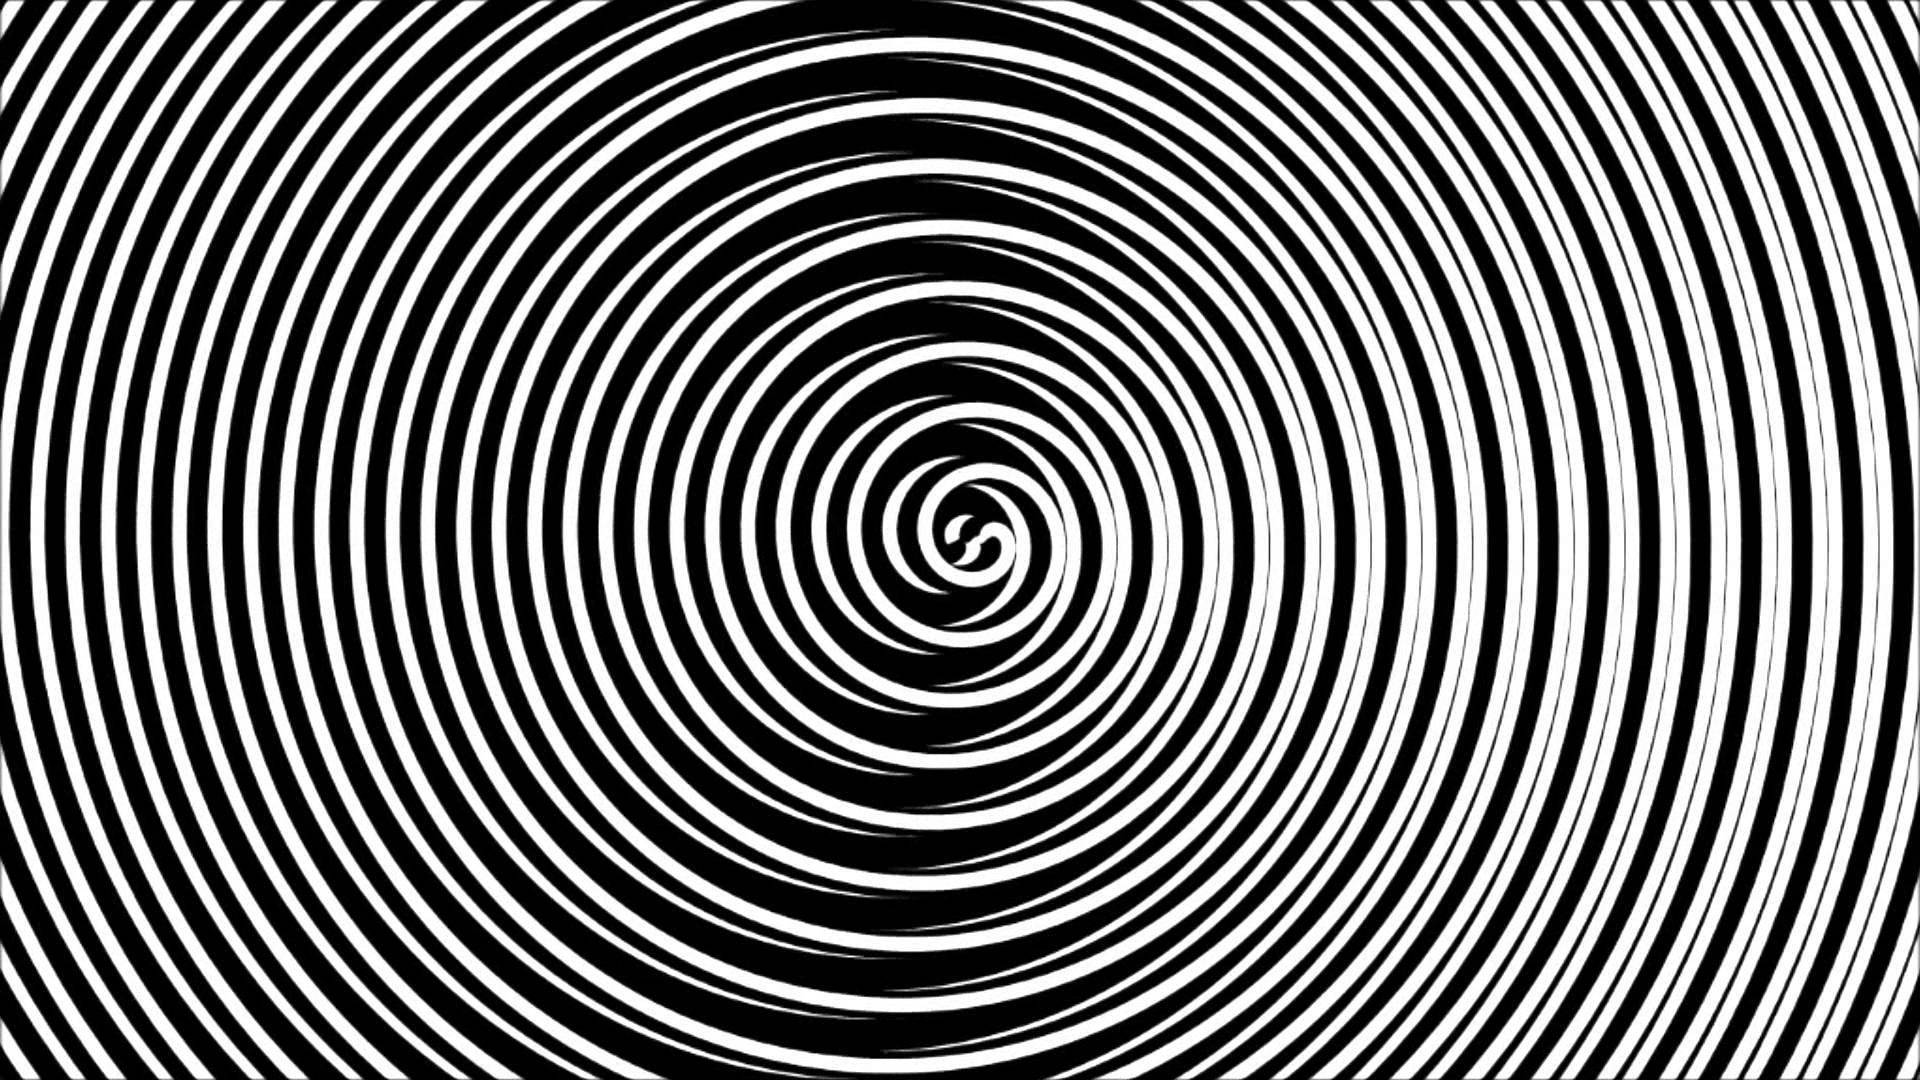 Hypnosis Spiral Metal-like Pattern